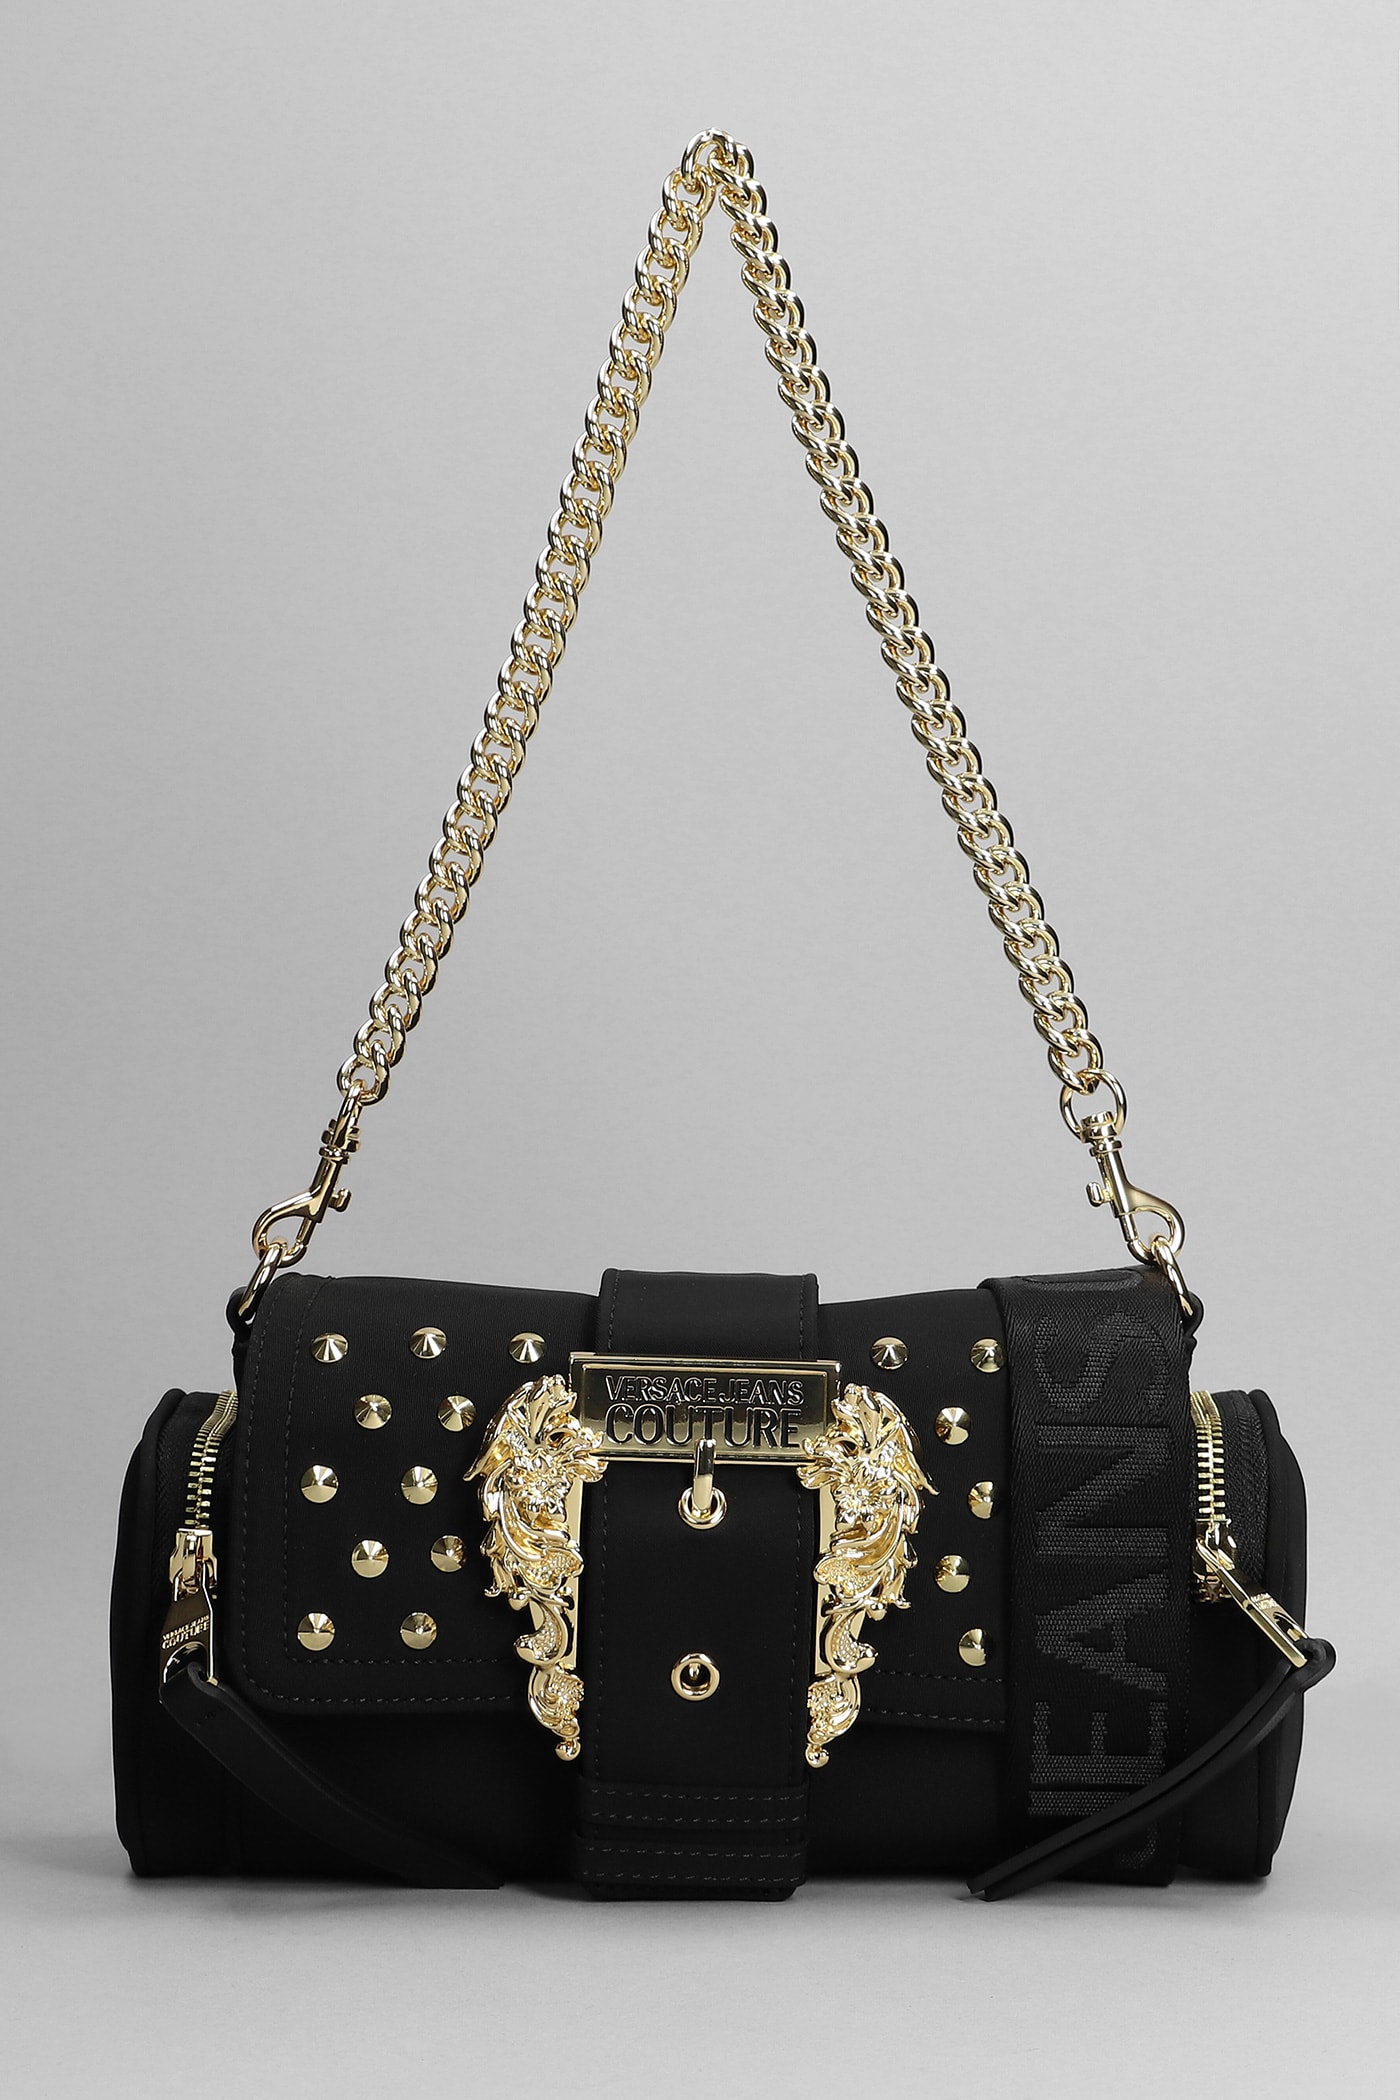 Versace Jeans Couture Shoulder Bag In Black Nylon